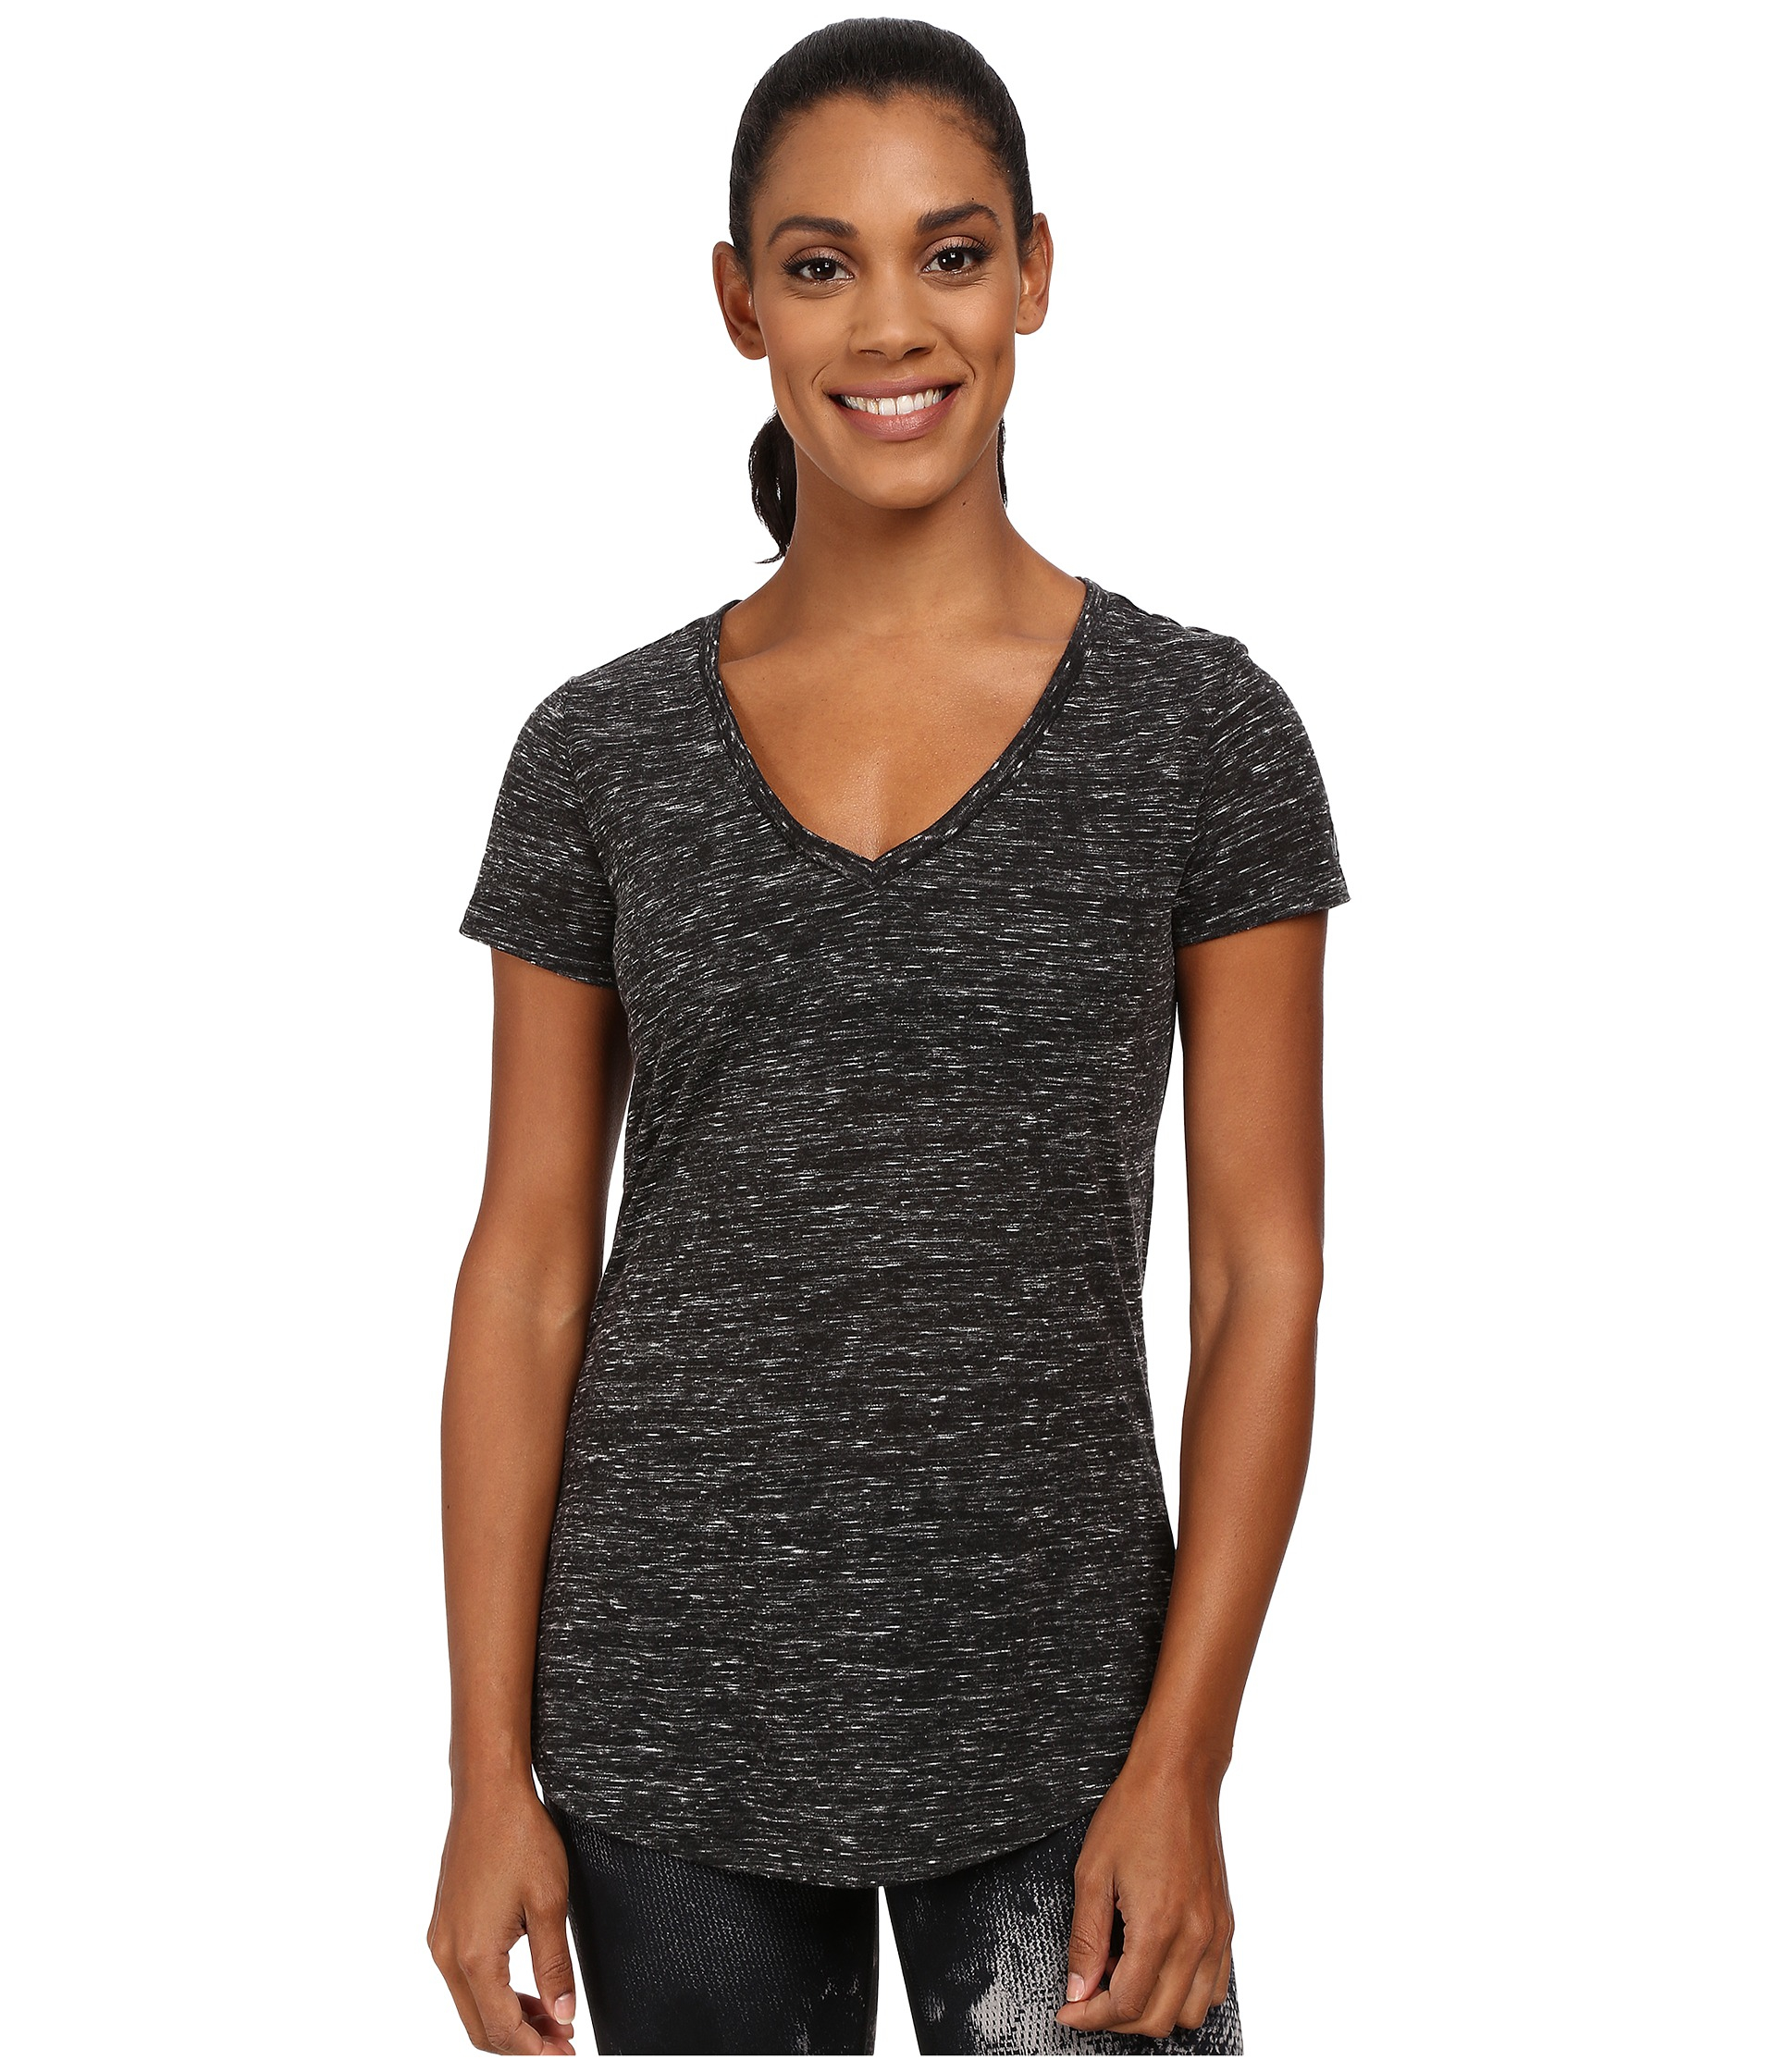 Lyst - Alo Yoga Deep V-neck Shirt in Black